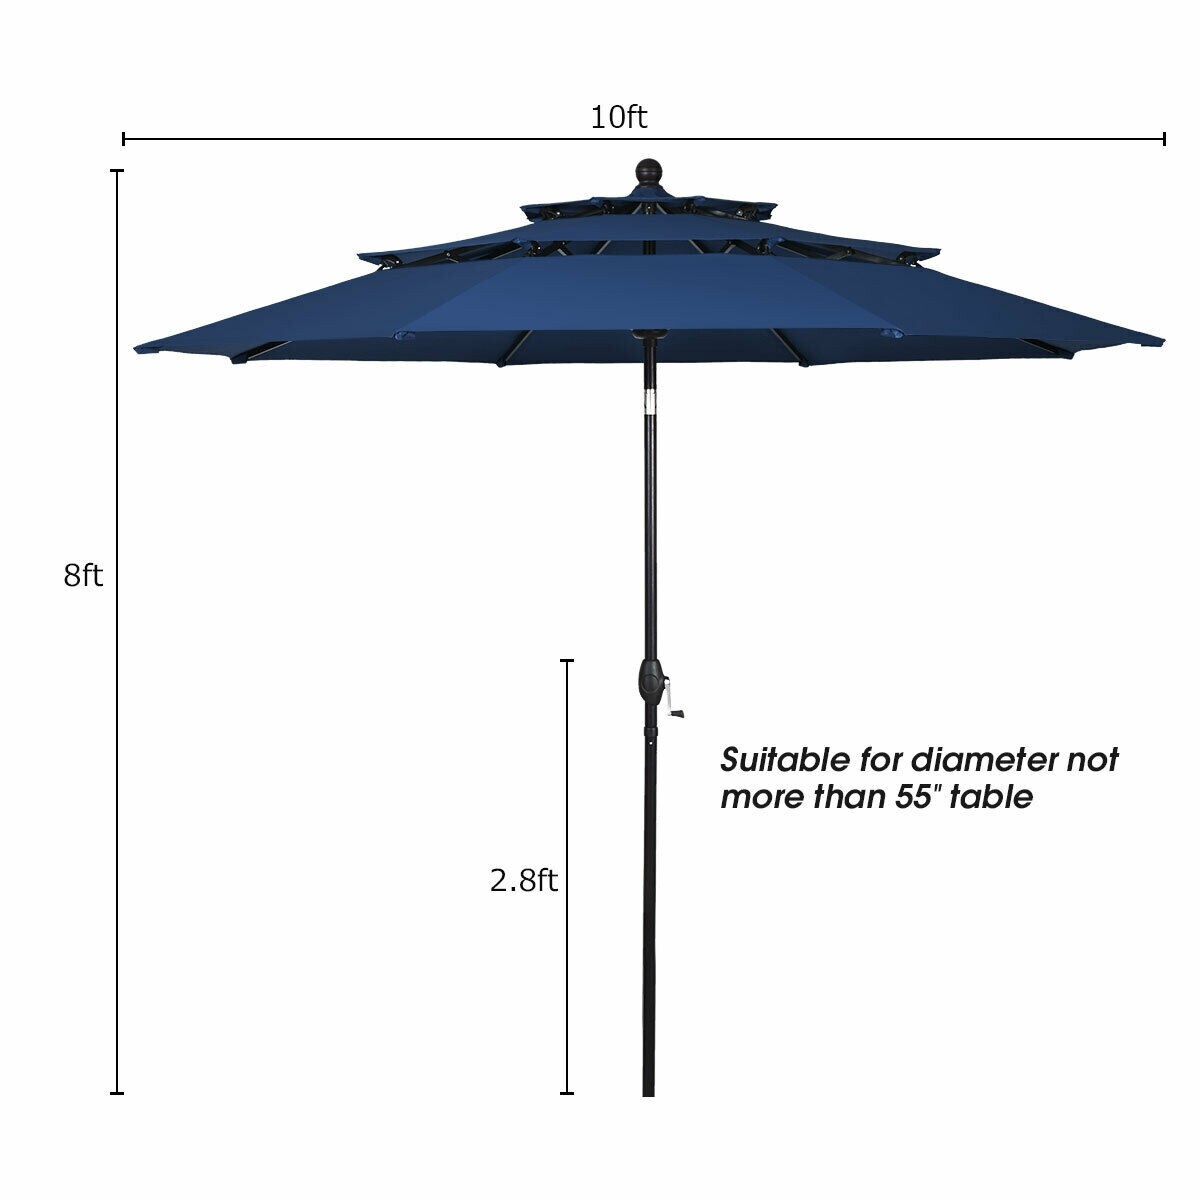 Clihome 10-ft Navy Auto-tilt Market Patio Umbrella at Lowes.com